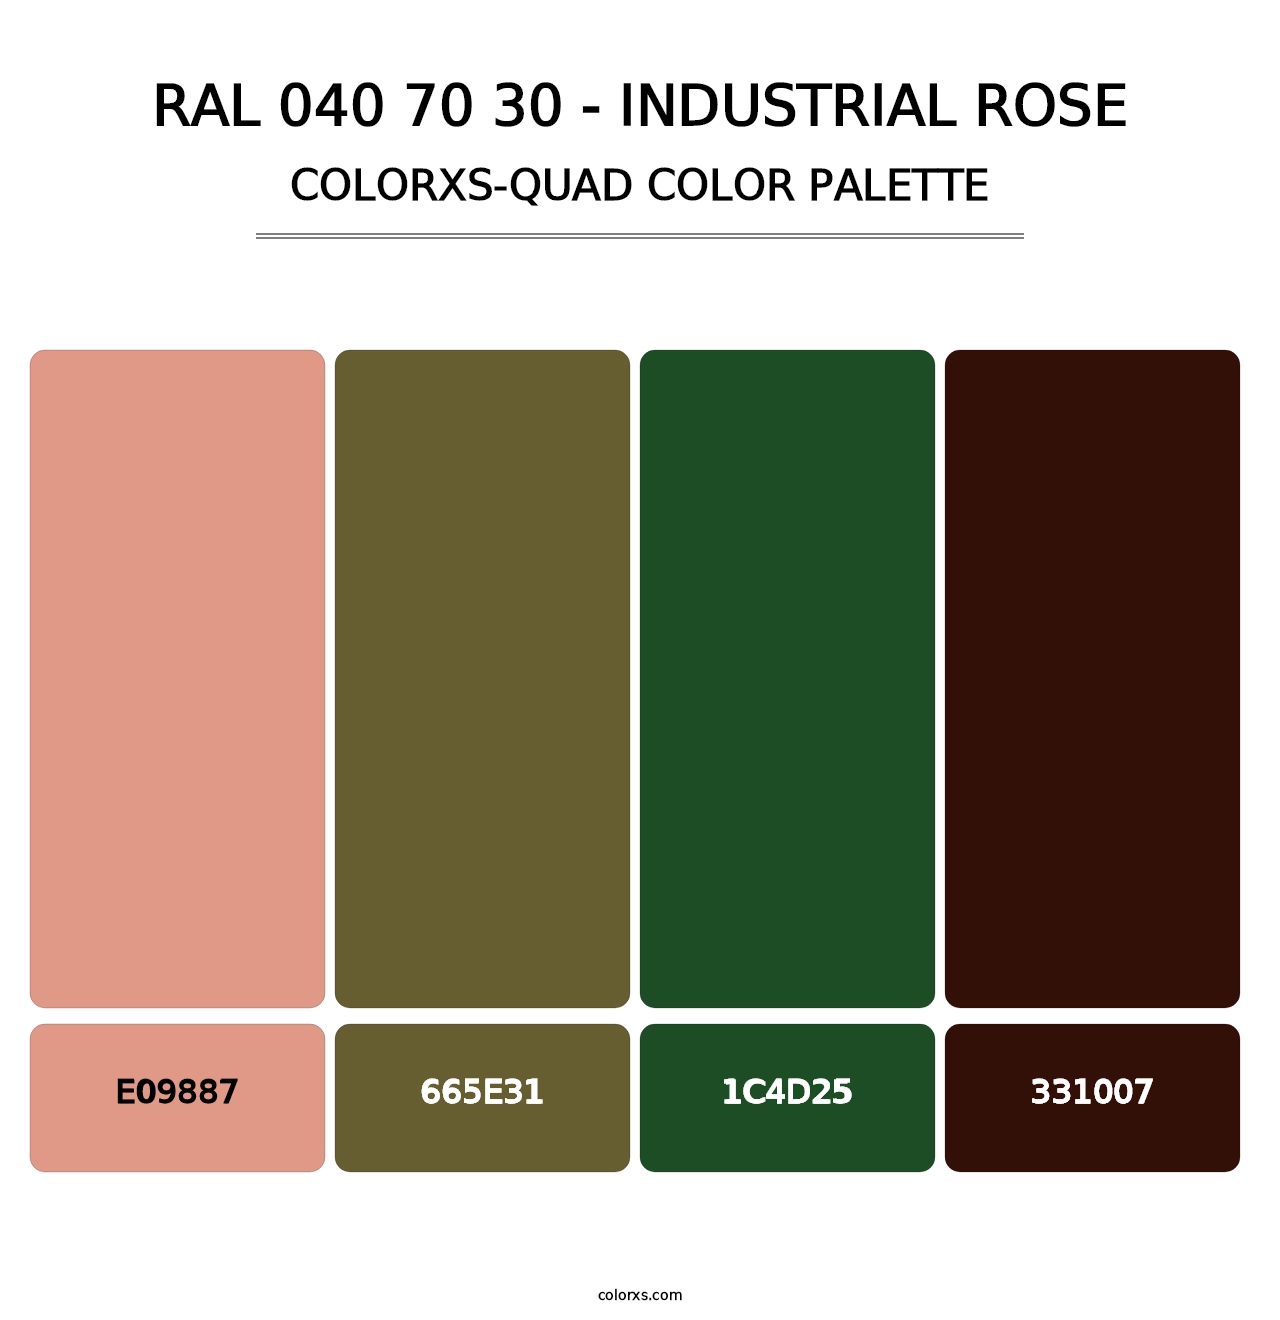 RAL 040 70 30 - Industrial Rose - Colorxs Quad Palette